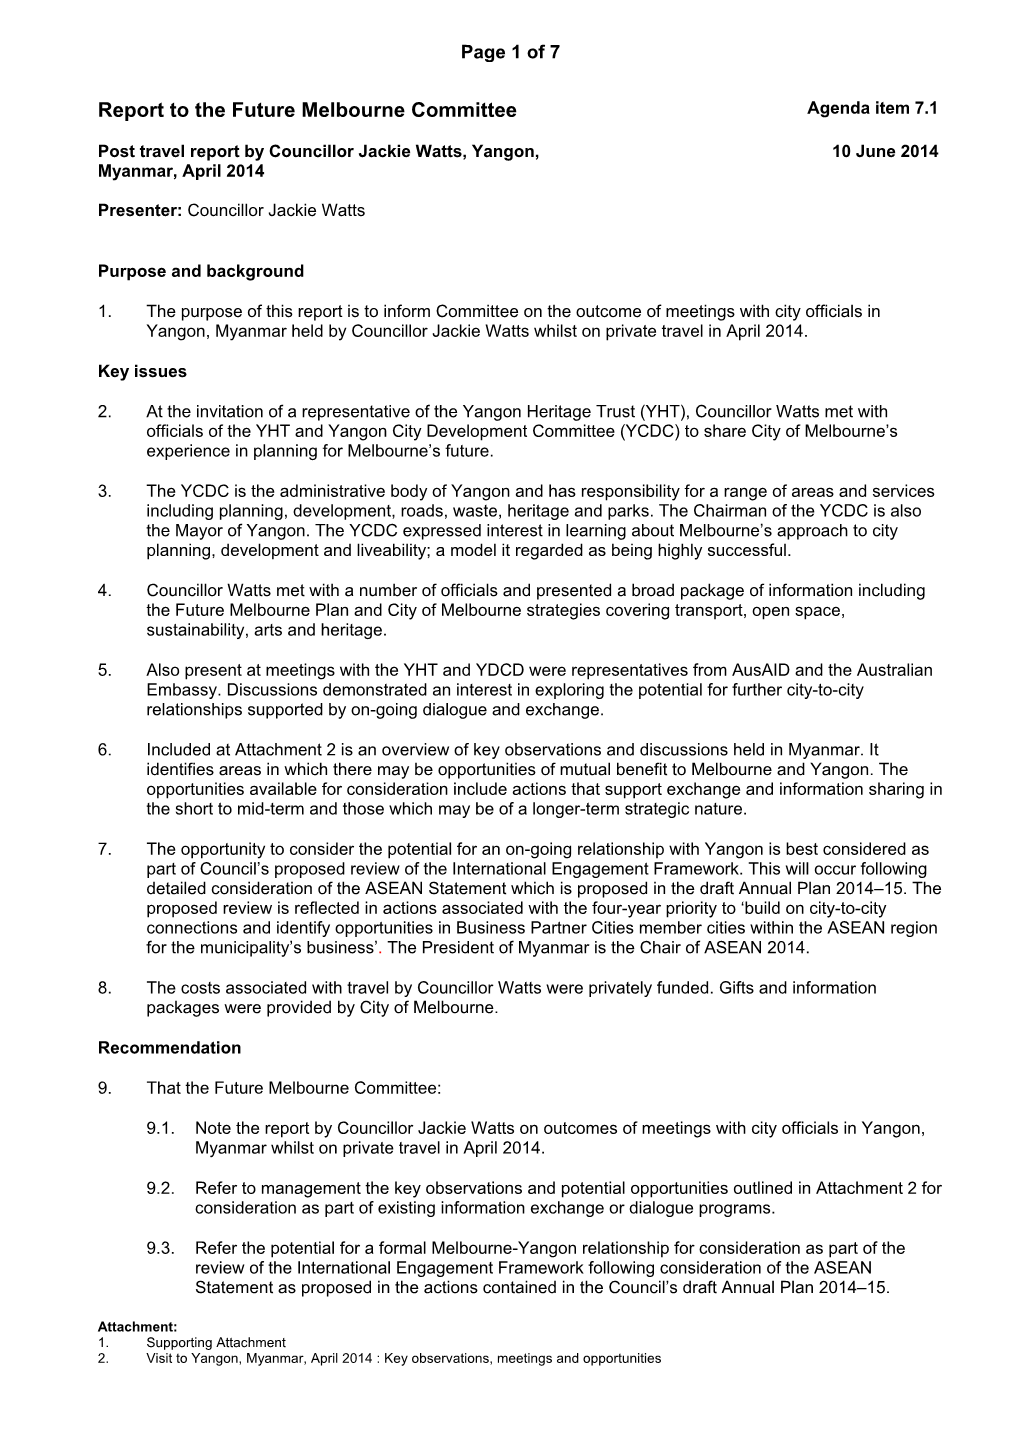 Report to the Future Melbourne Committee Agenda Item 7.1